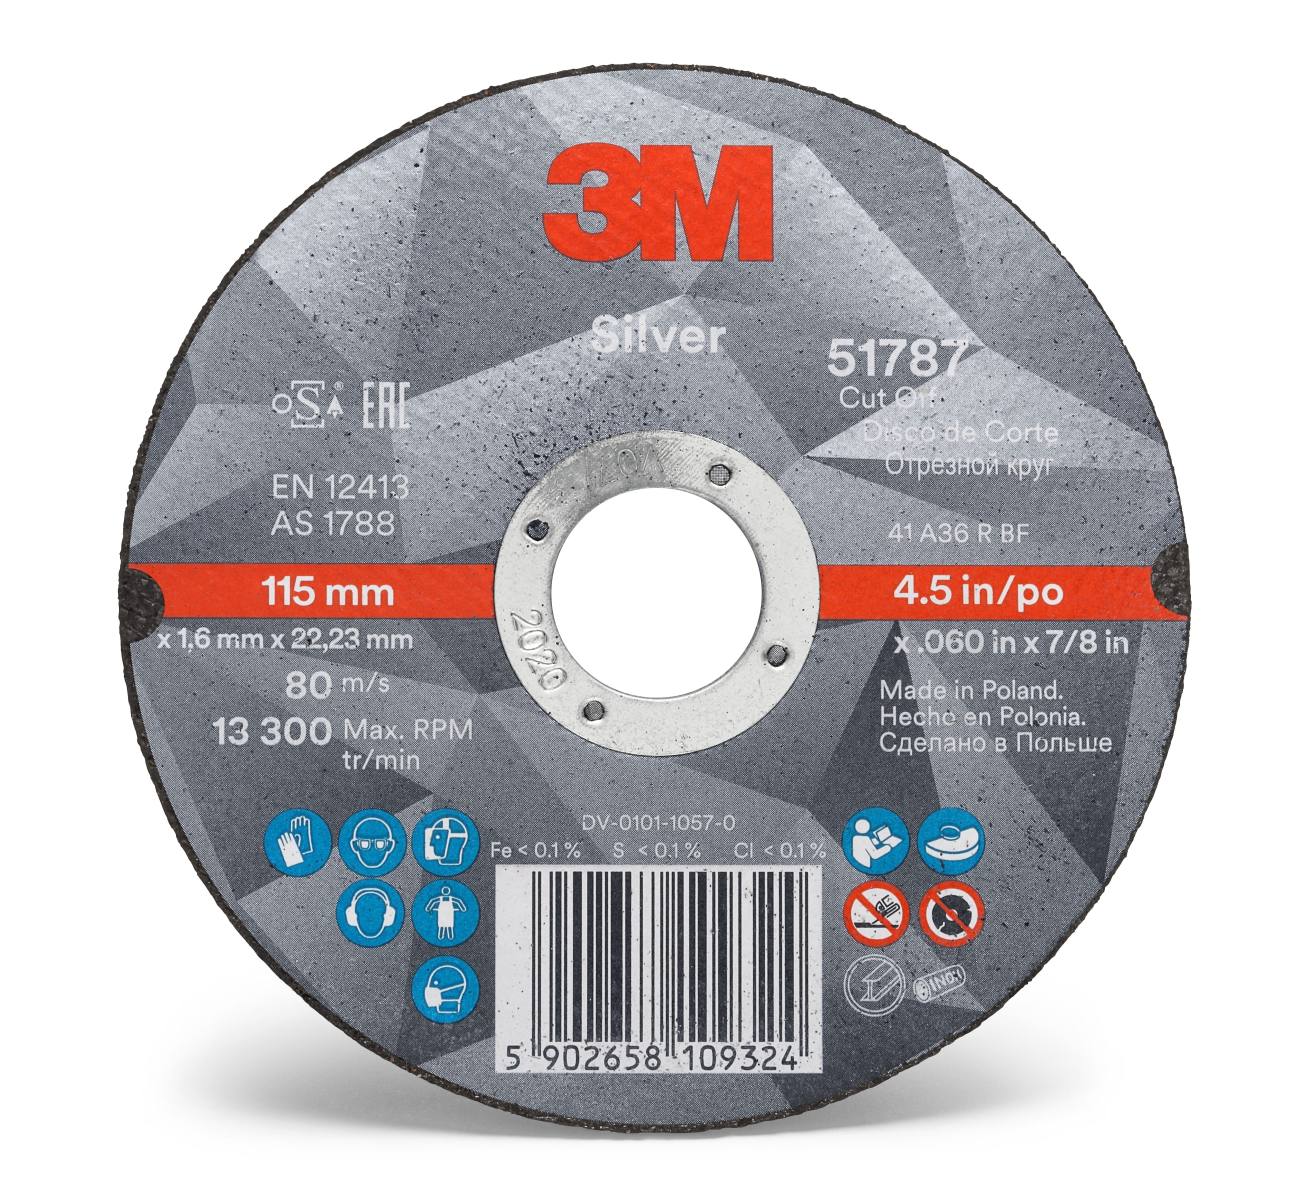 Disco da taglio 3M Silver Cut-Off, 125 mm, 1,6 mm, 22,23 mm, T41, 51792